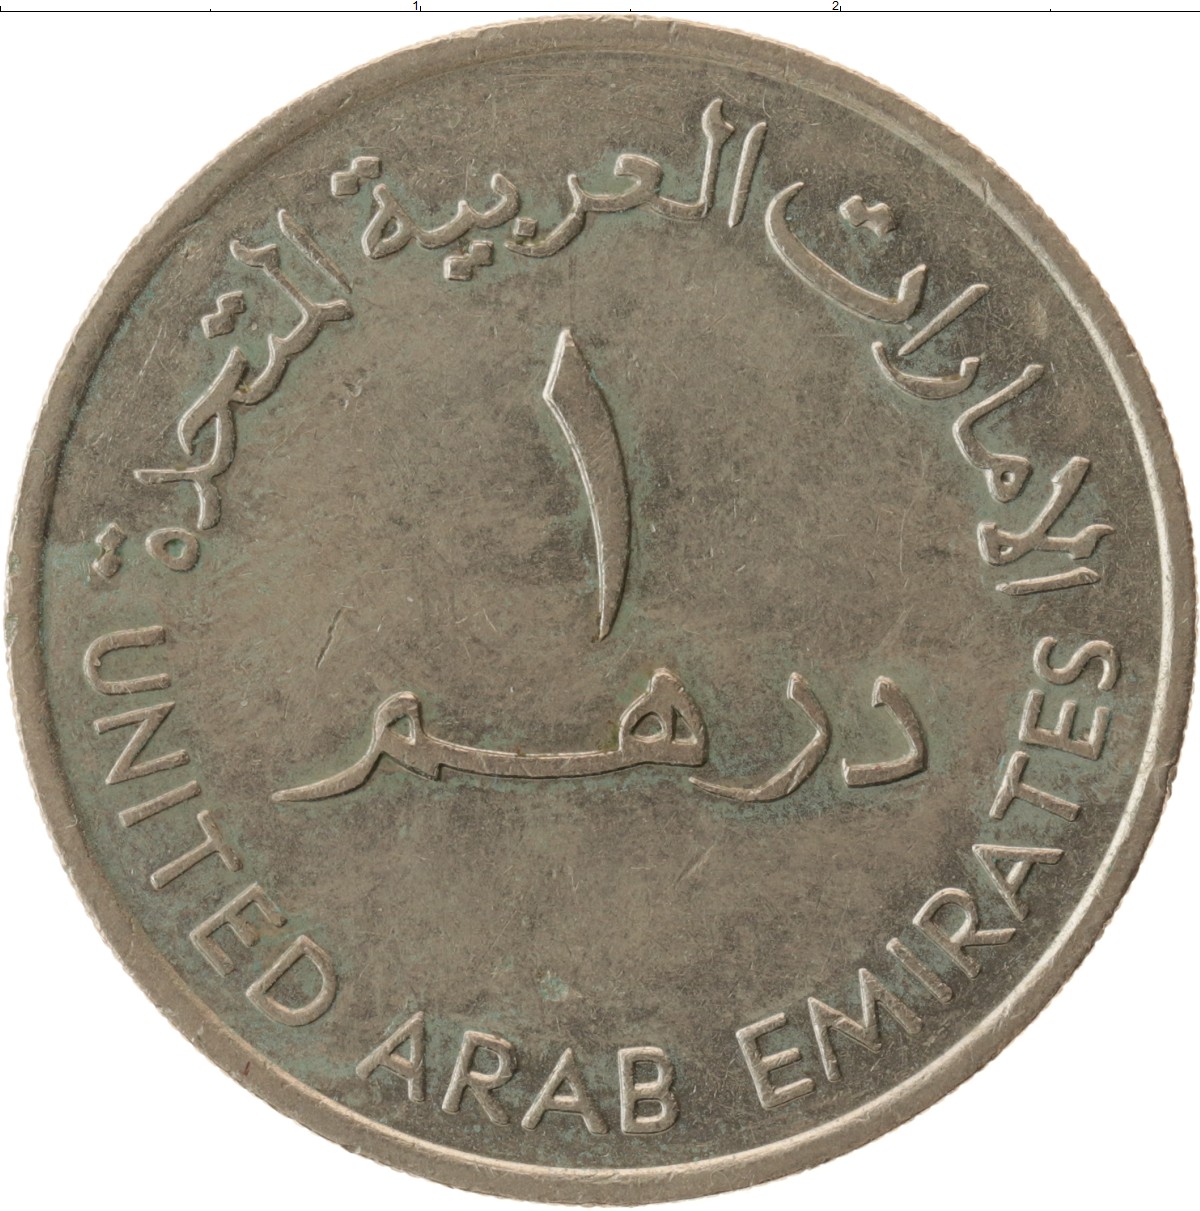 220 дирхам. Арабская монета 1 дирхам. Монеты арабских Эмиратов 1 дирхам. ОАЭ 1 дирхам 1989. Арабские монеты номинал.